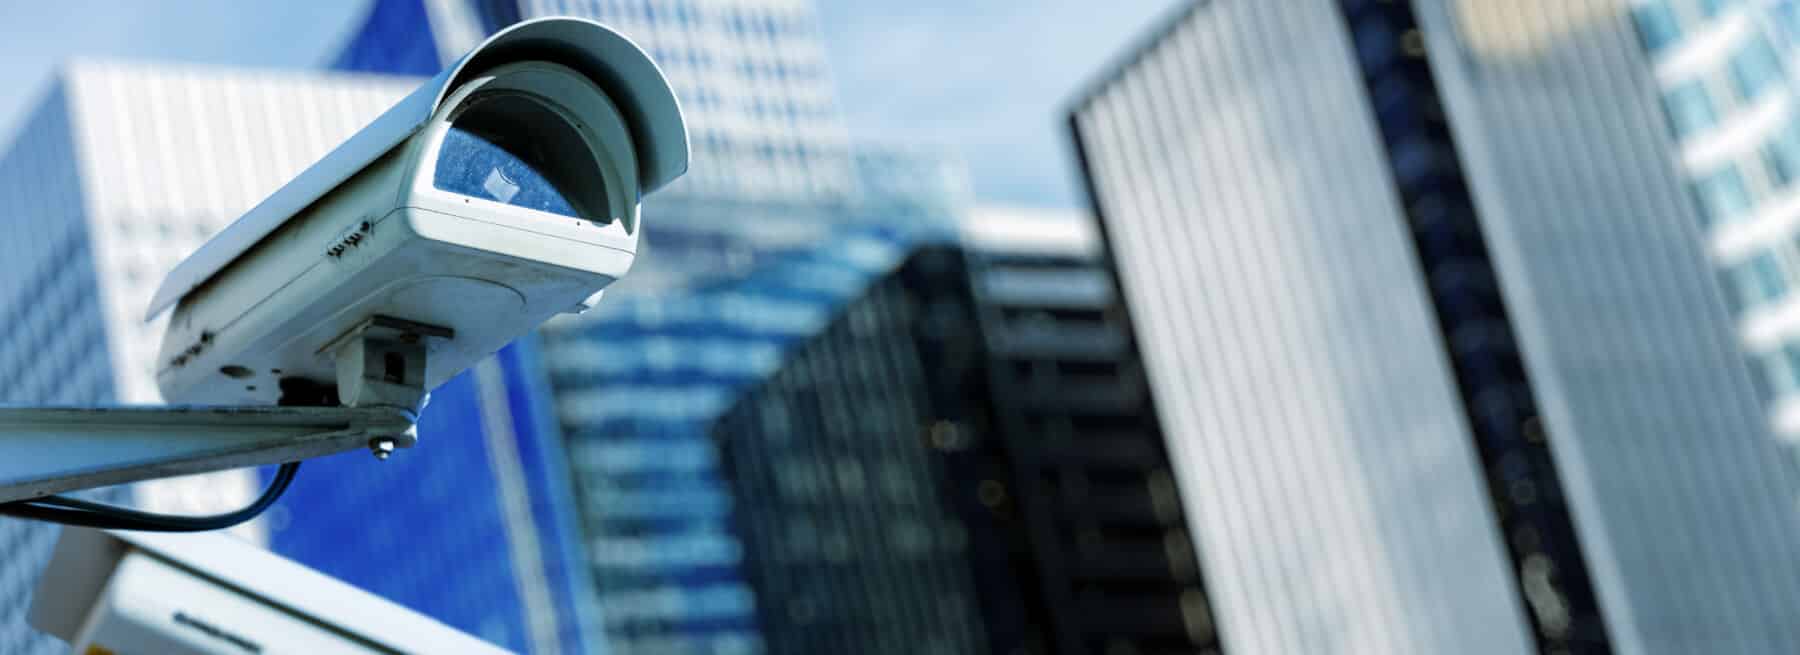 Top 5 video surveillance trends